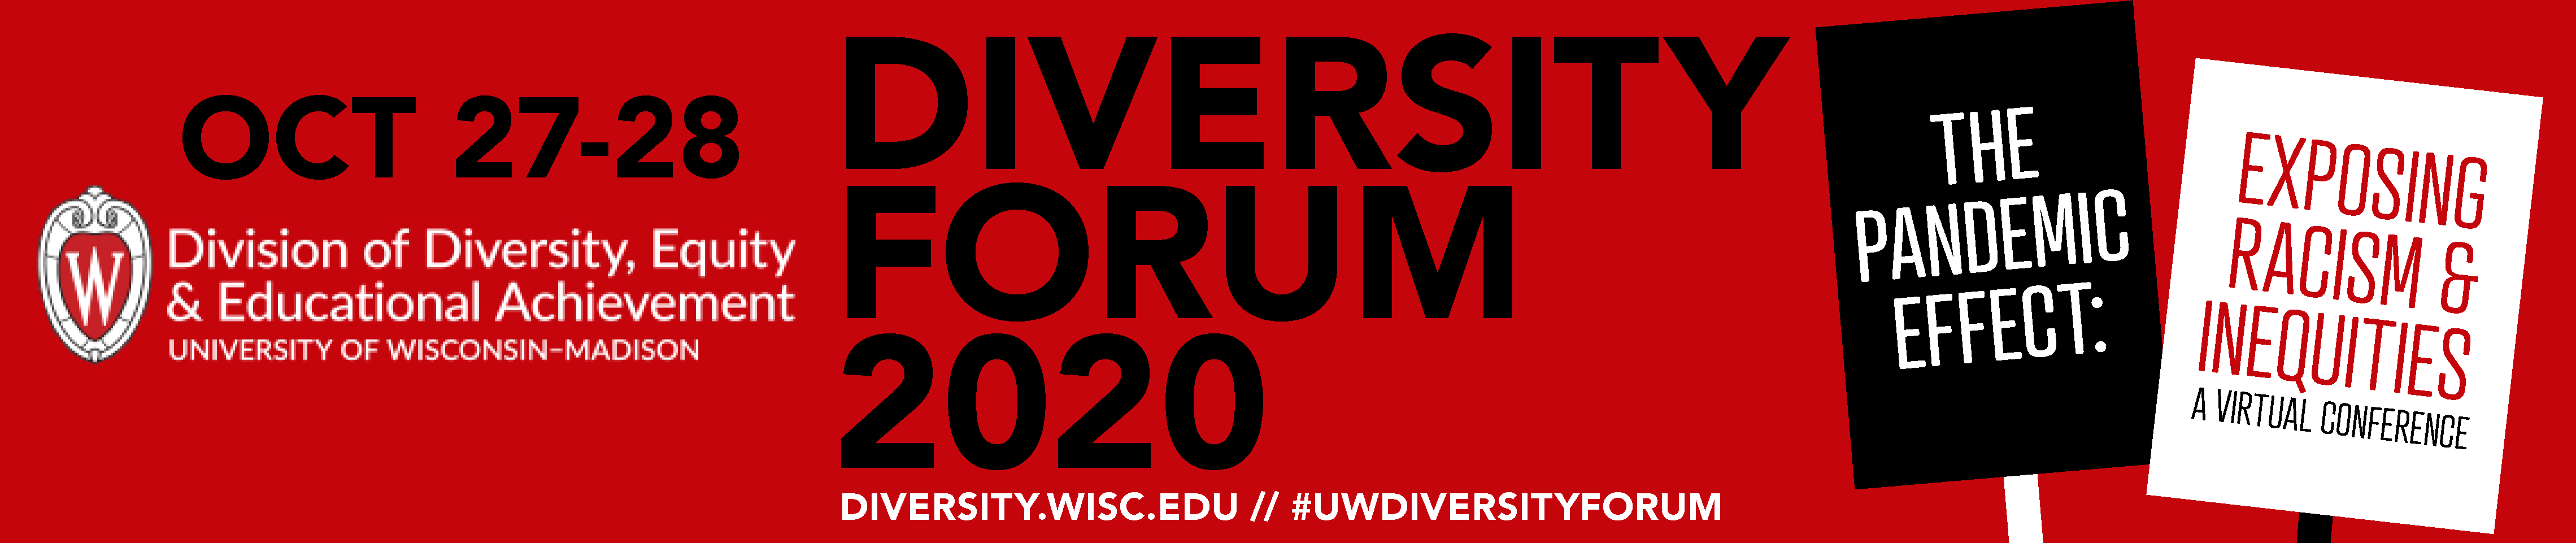 Diversity Forum 2020